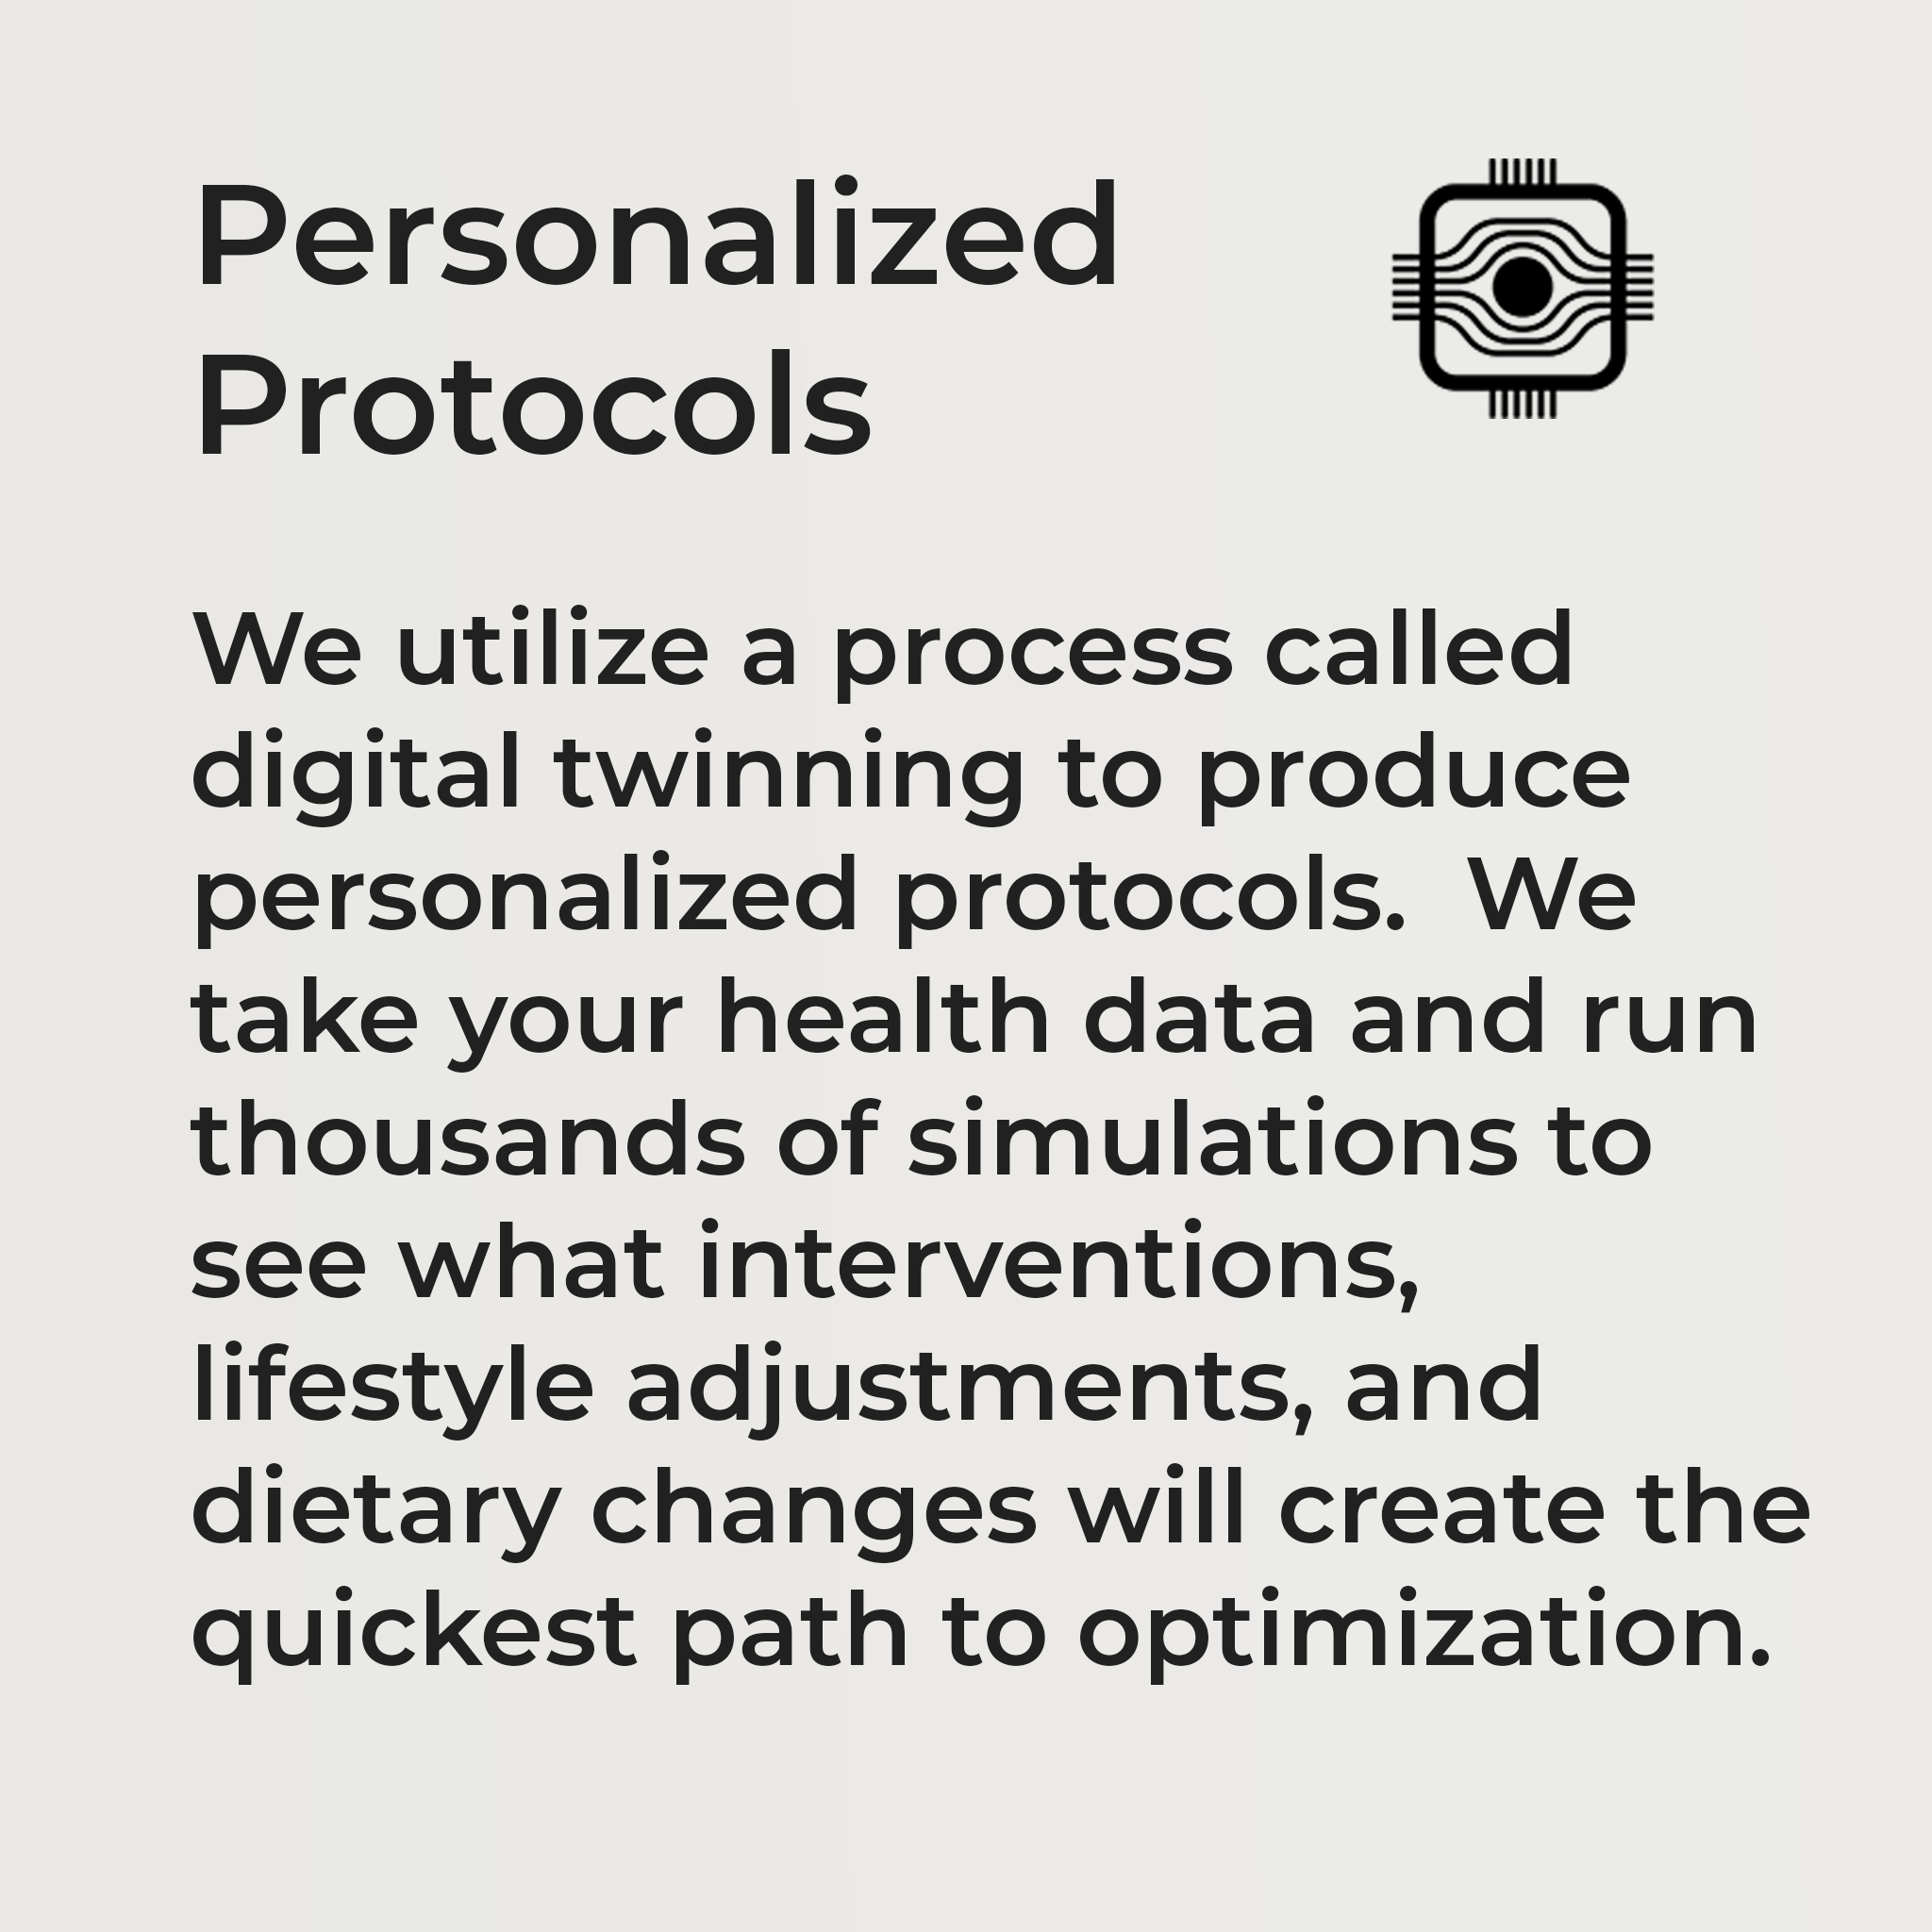 Personalized Protocols